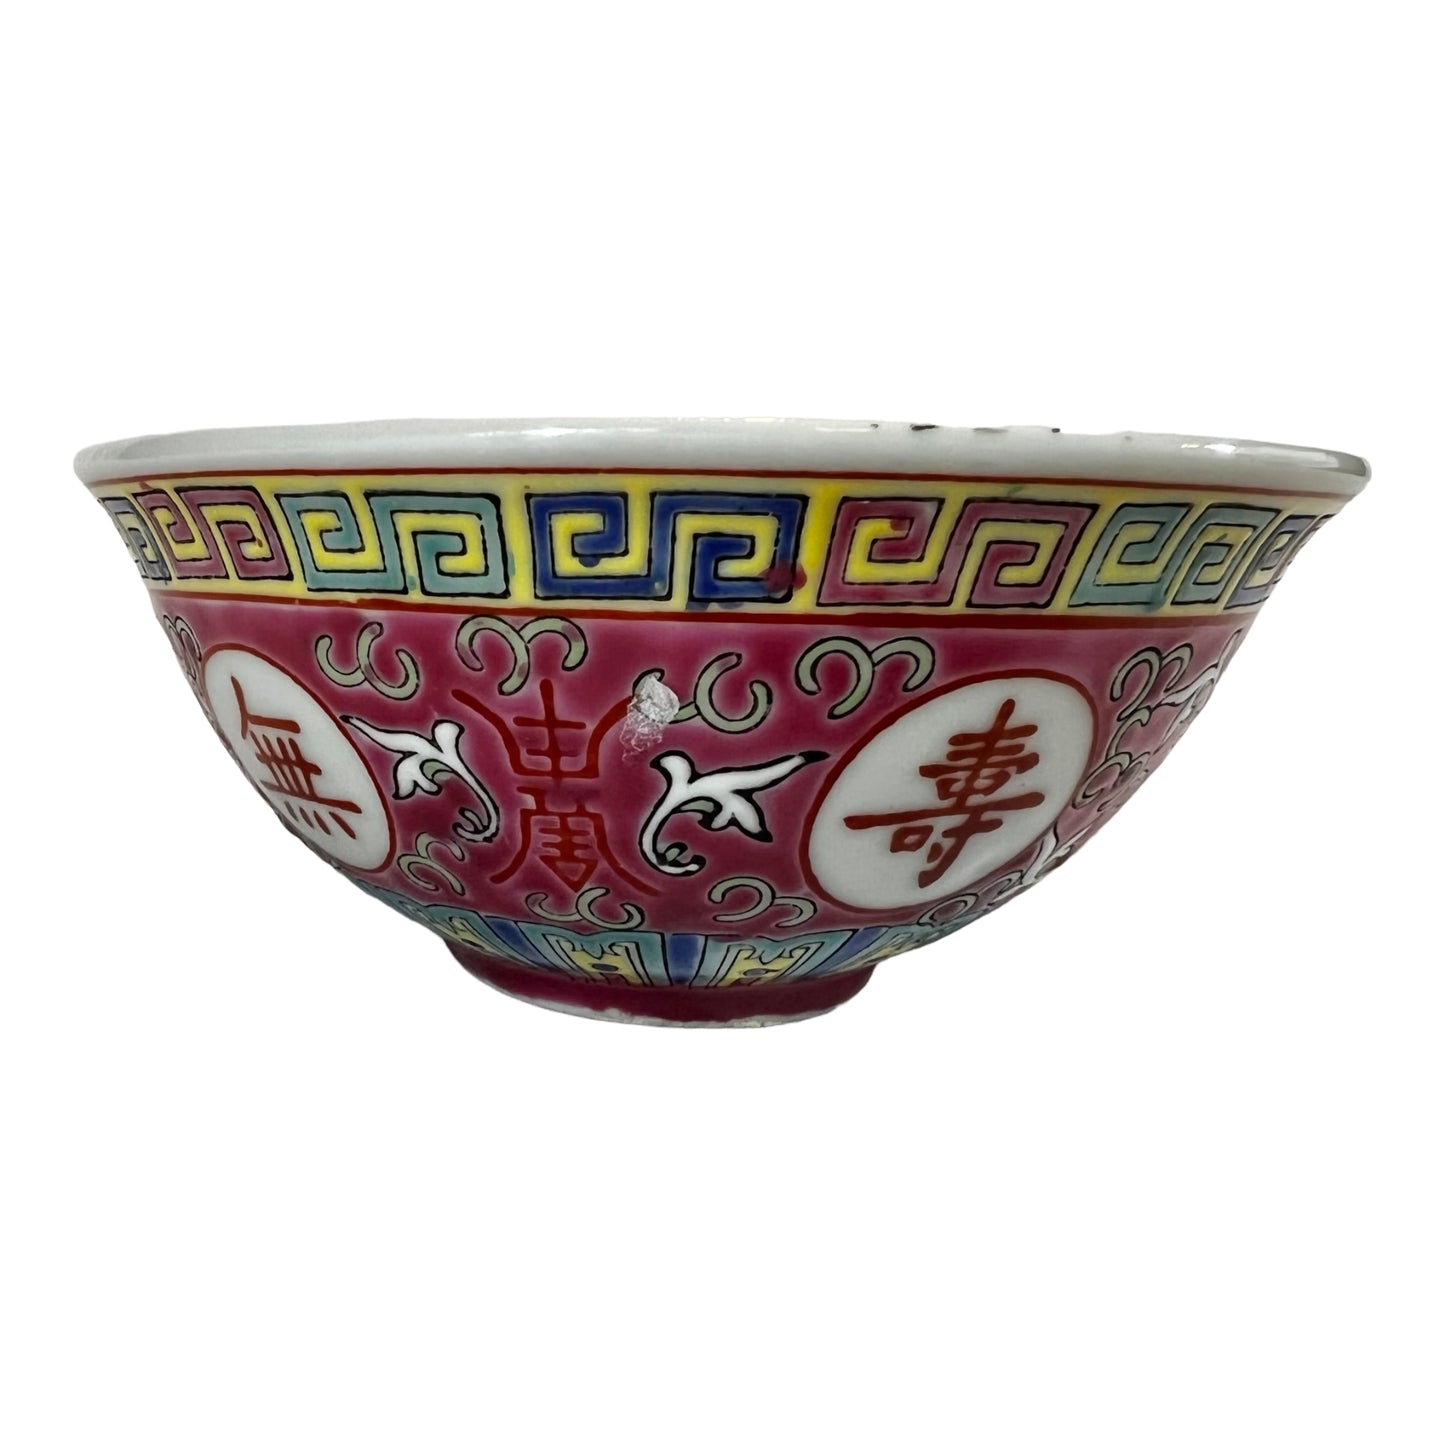 Vintage Chinese Porcelain Rice Bowl